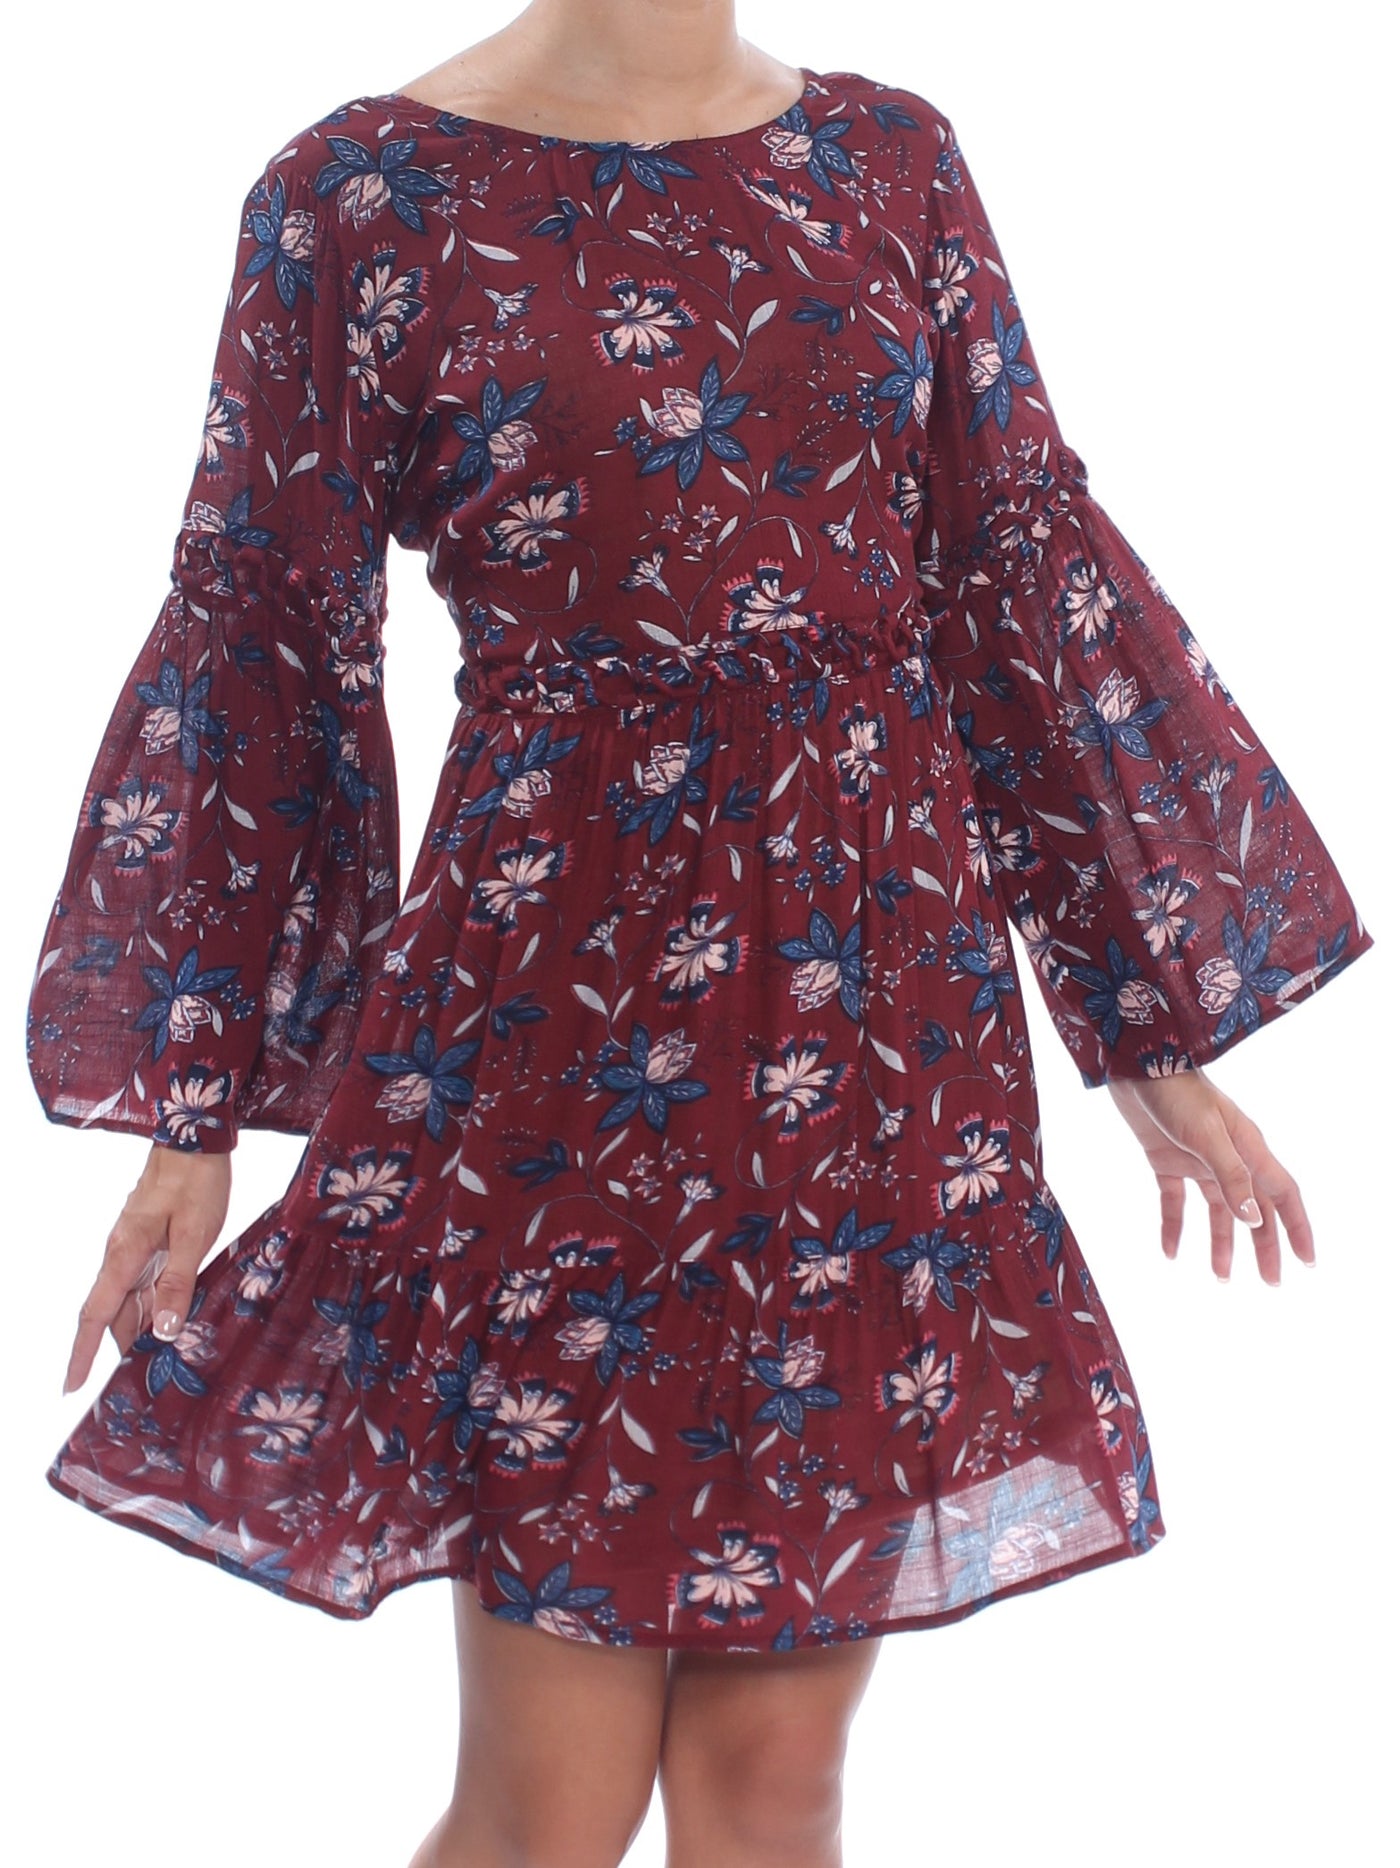 WILLIAM RAST Womens Burgundy Printed Bell Sleeve Scoop Neck Mini Dress